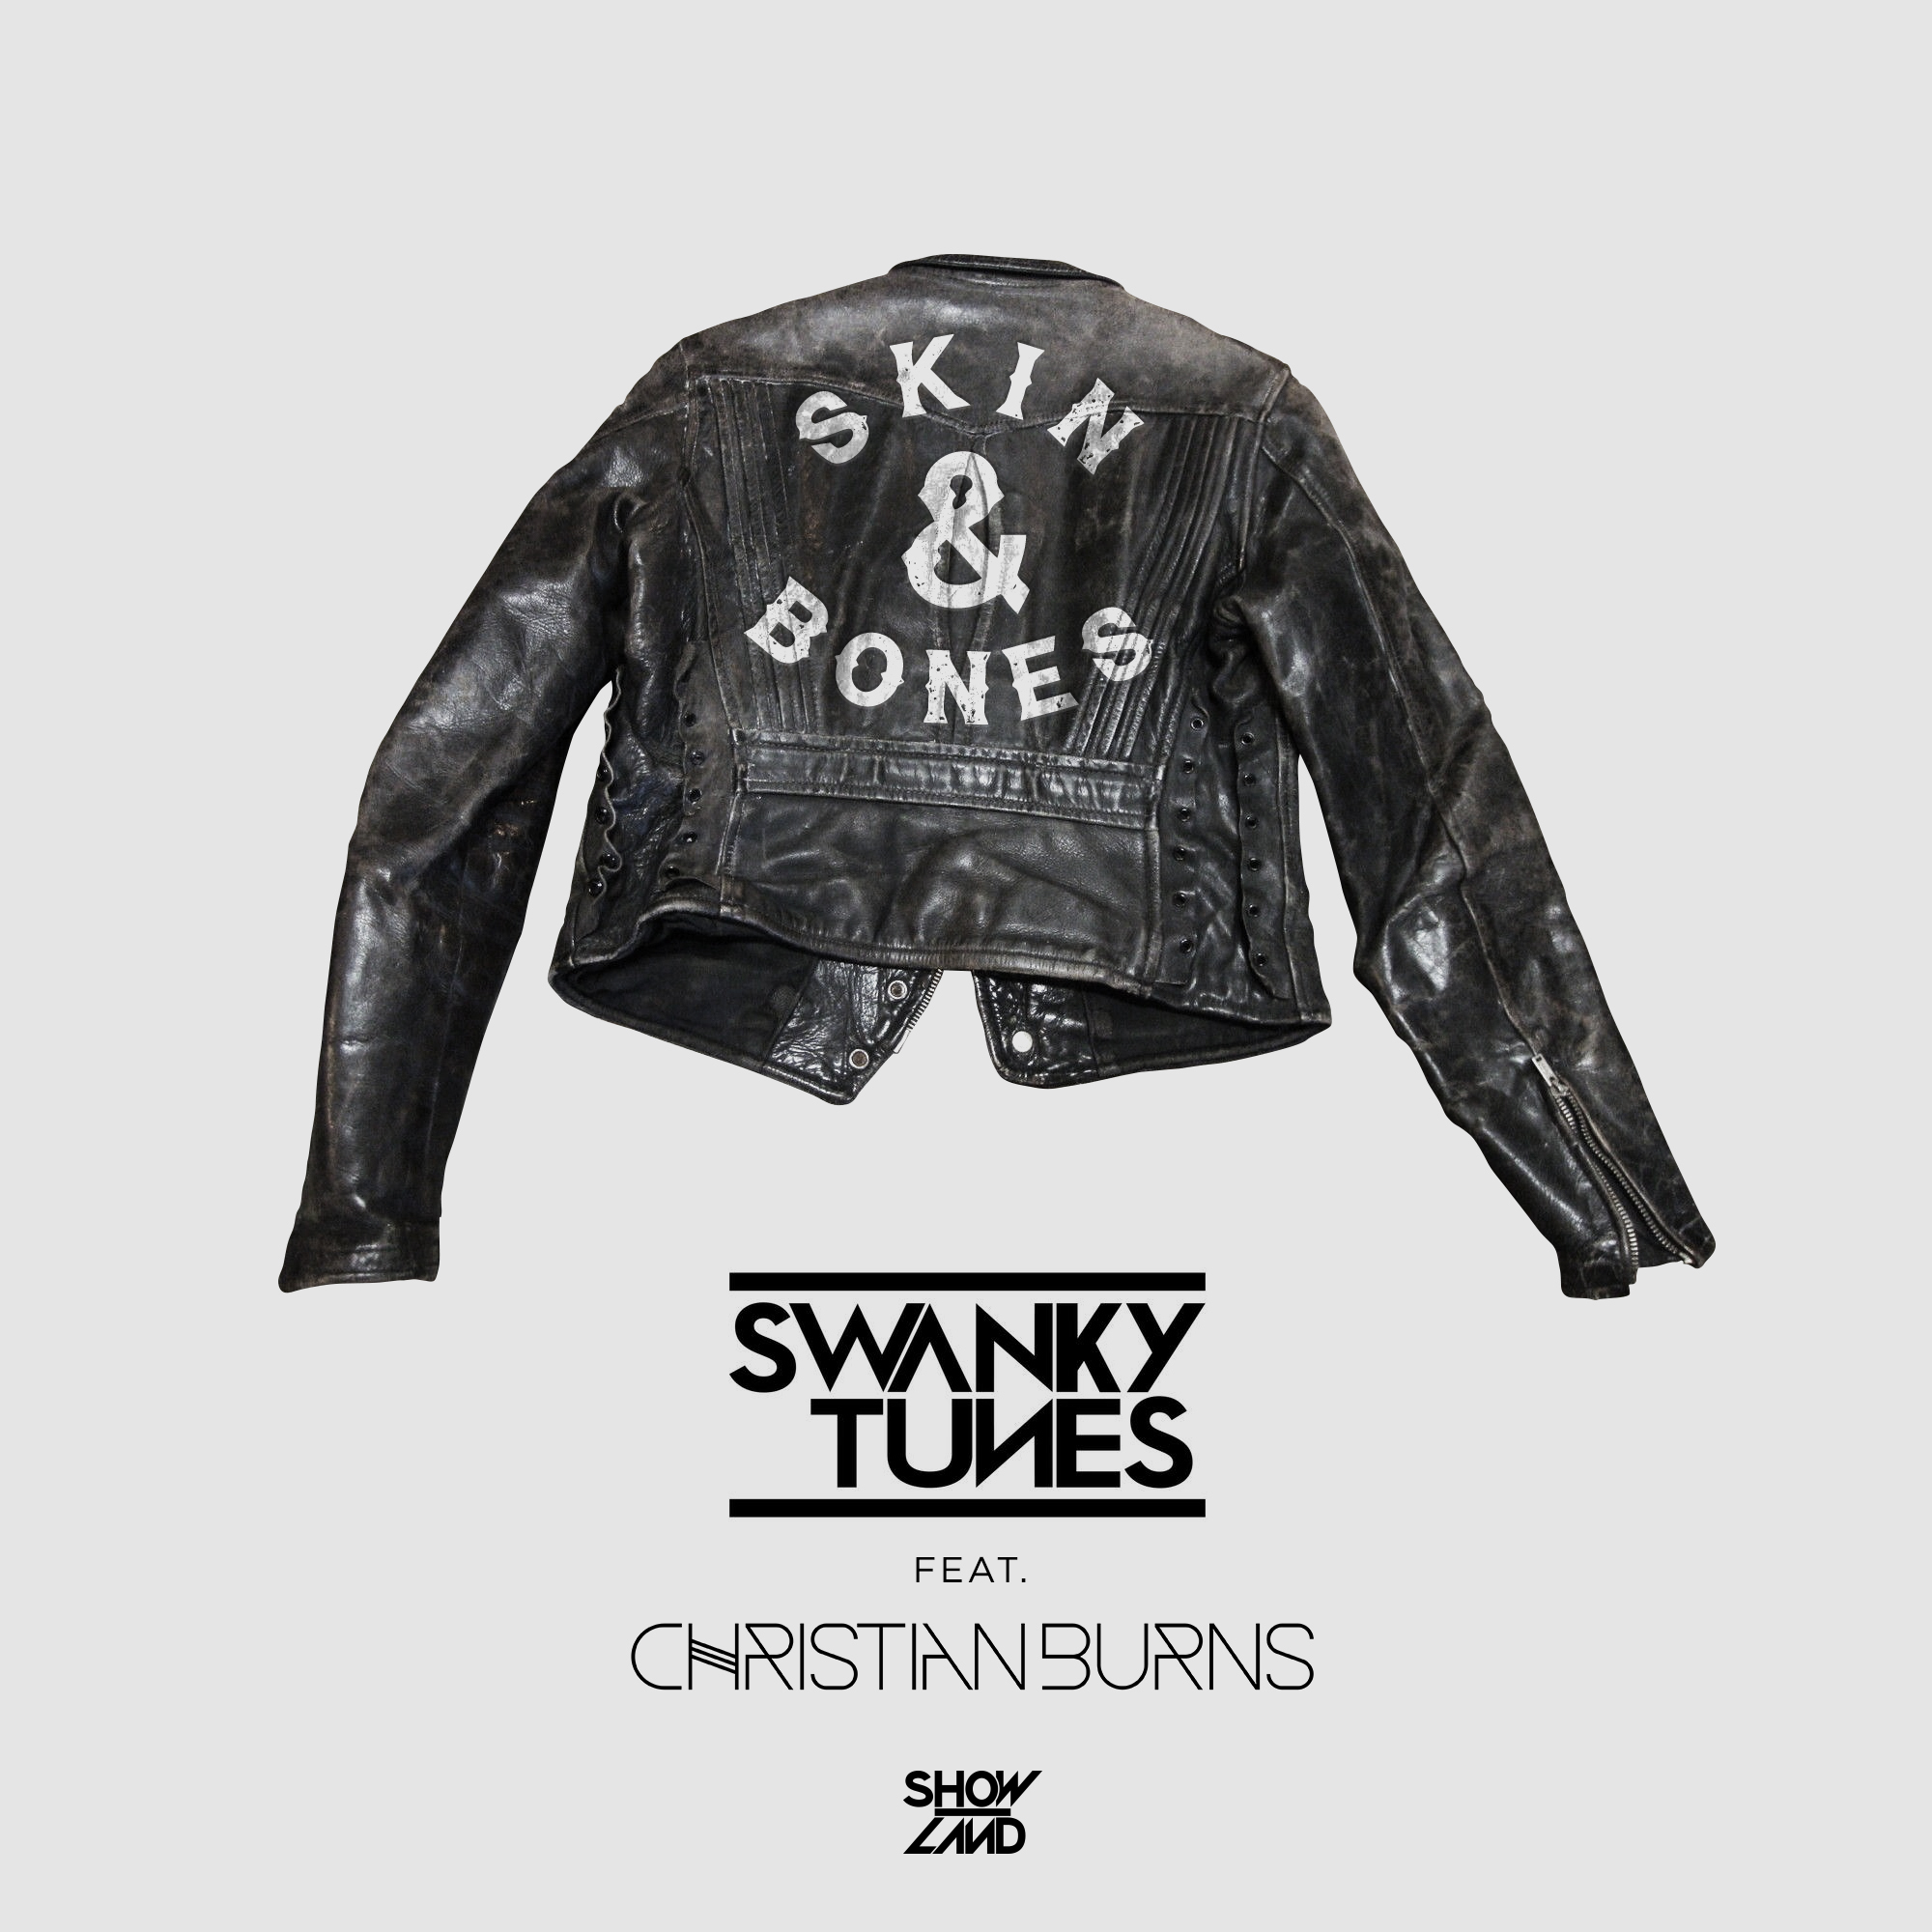 Bone n skin bones. Skin & Bones Swanky Tunes & Christian Burns. Bones Swanky Tunes. Swanky Tunes ft. Christian Burns - Skin & Bones (Radio Edit). Skin and Bones одежда.